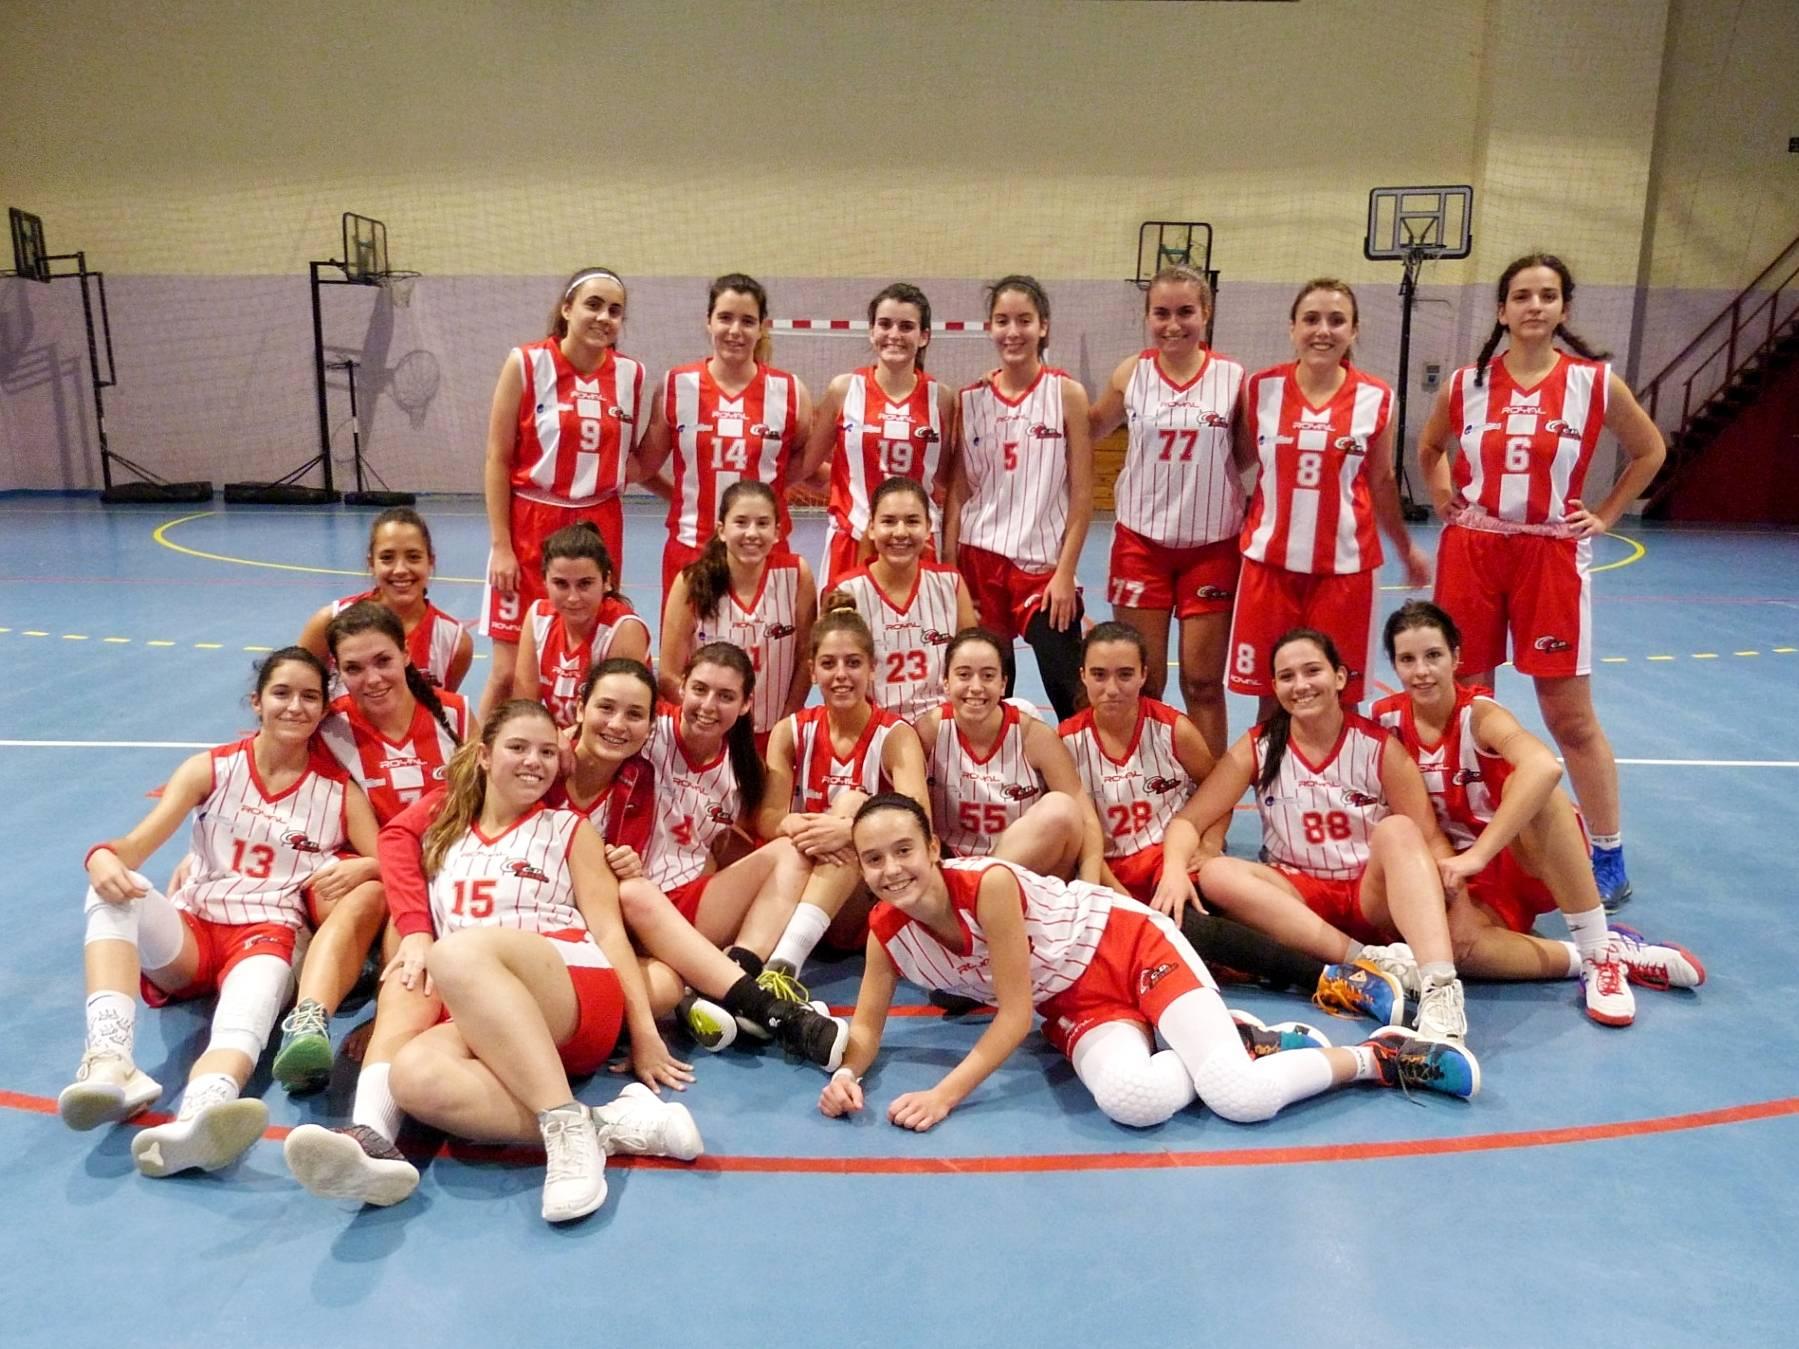 La Copa Senior Provincial de Baloncesto vuelve a disputarse en Segovia